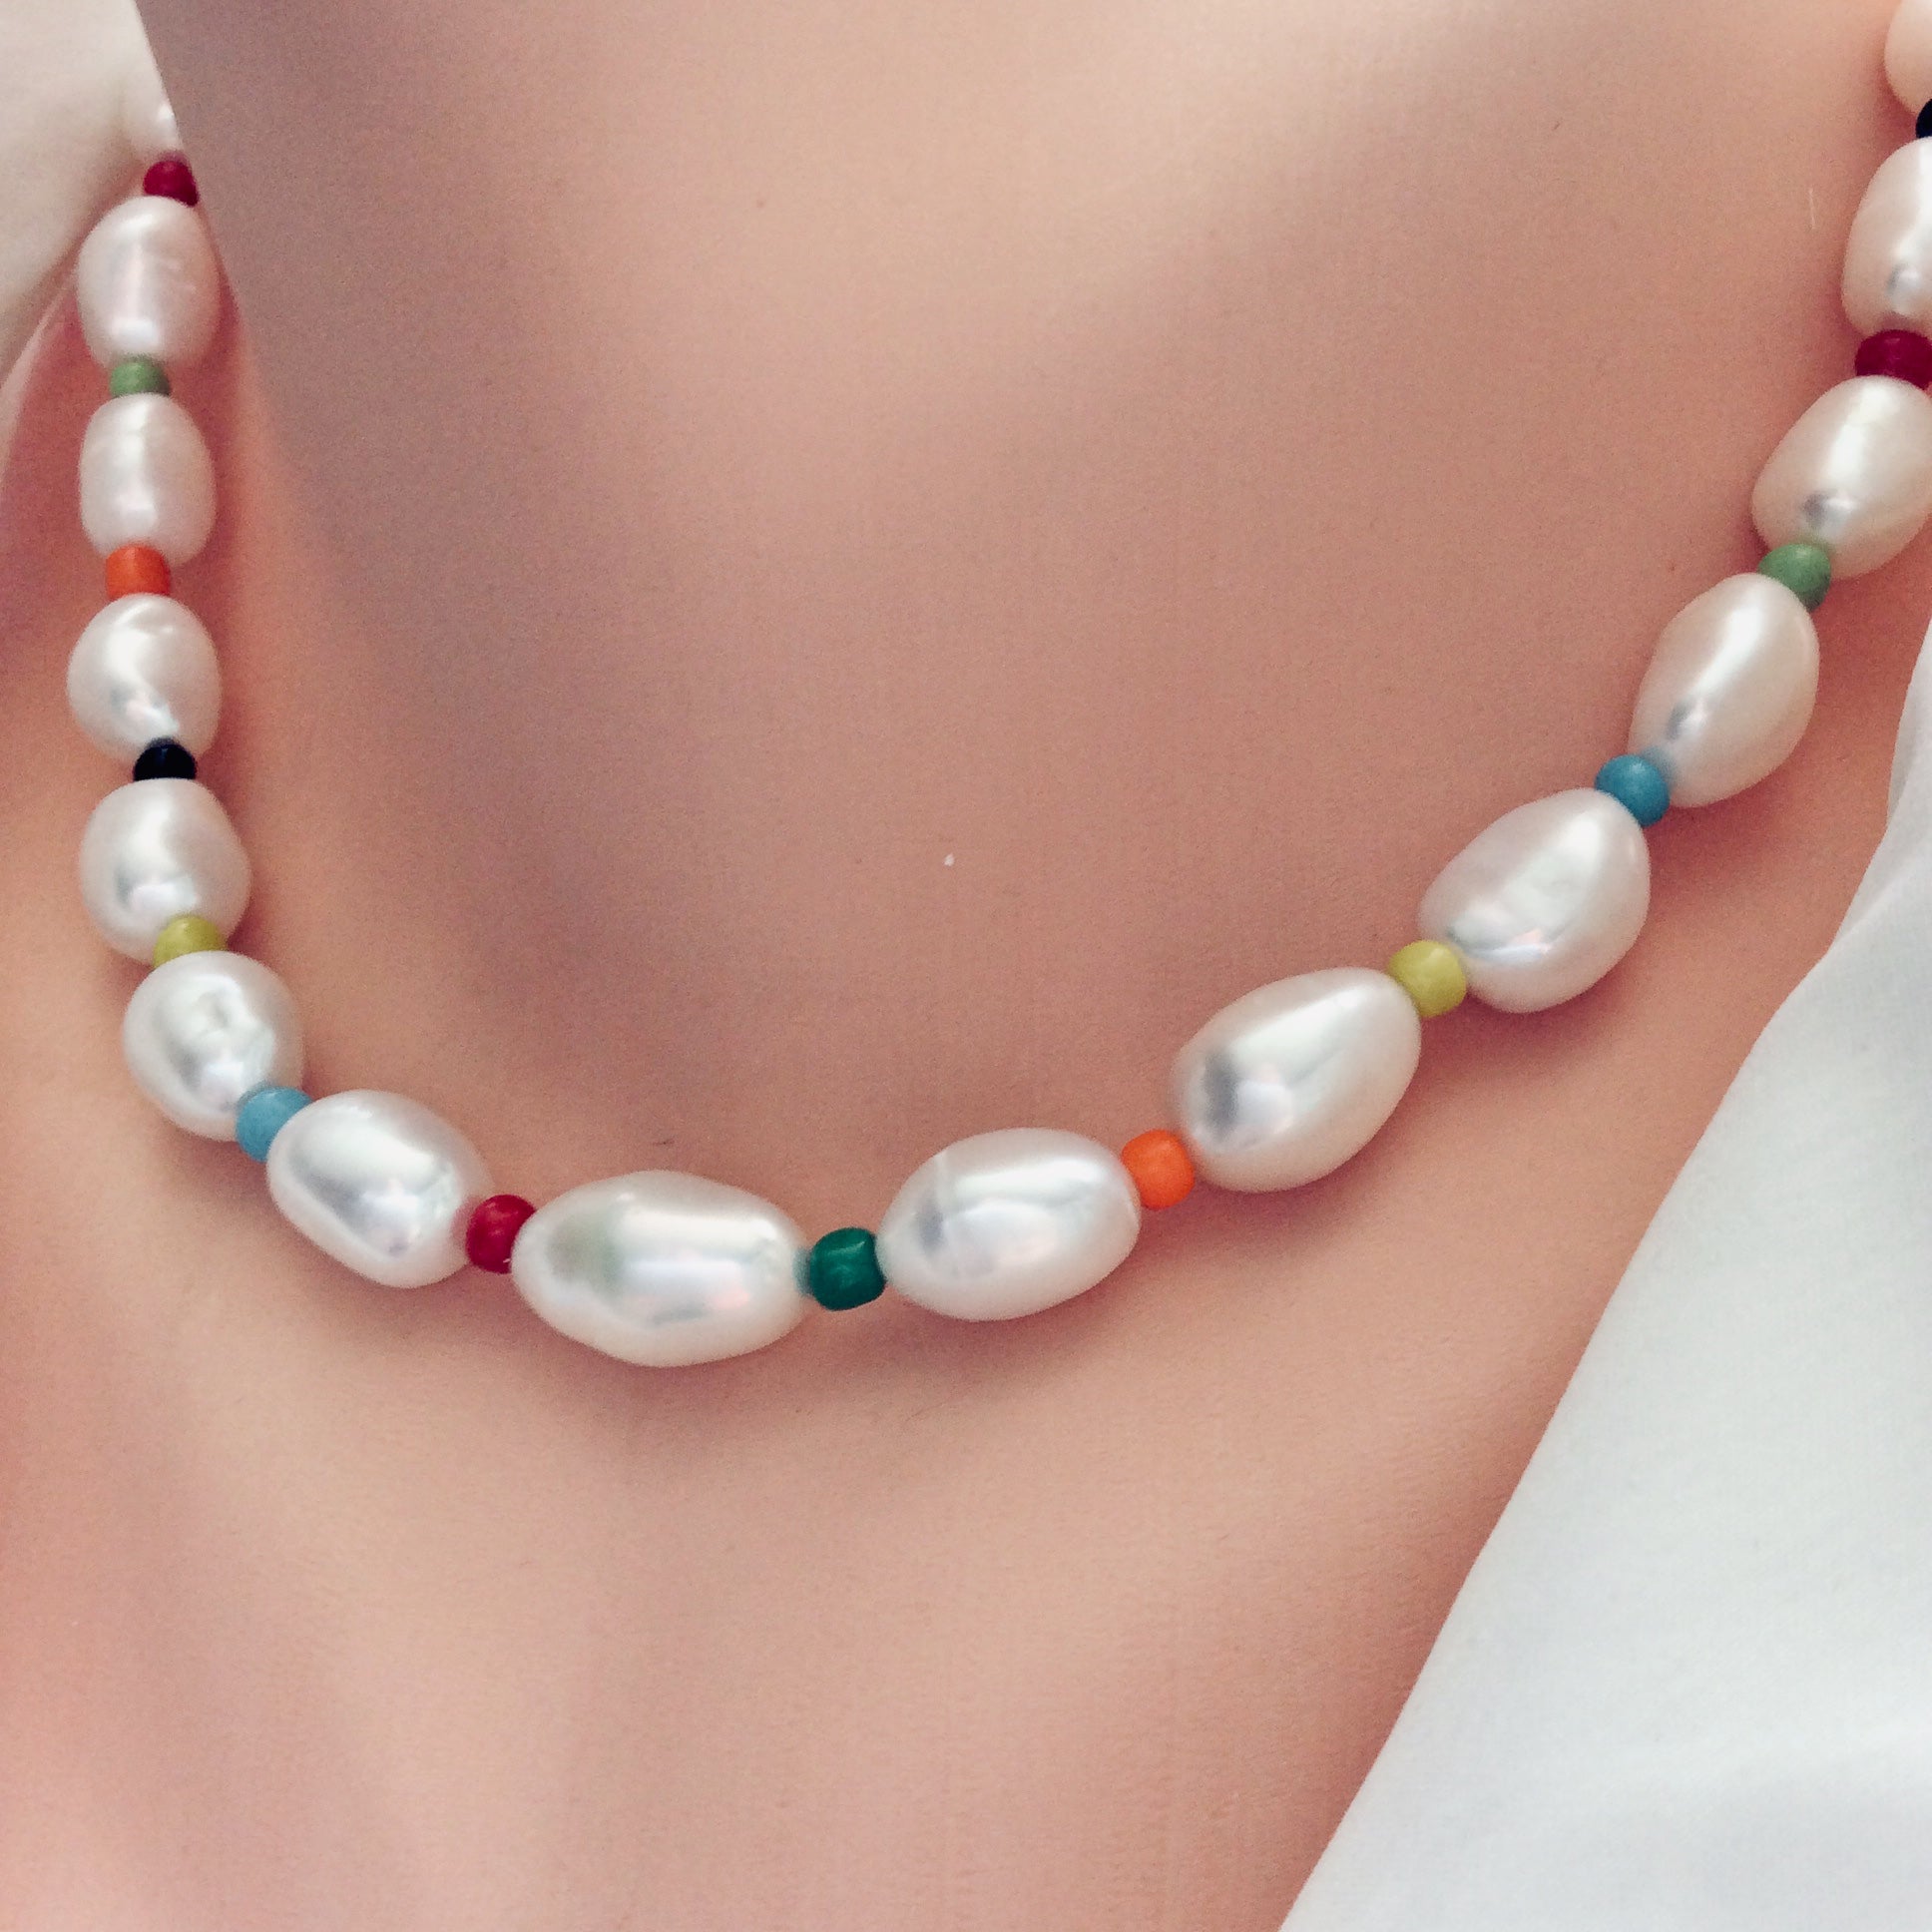 Beach Boho Shell Pearl Pendant Multi-layered Chain Necklace